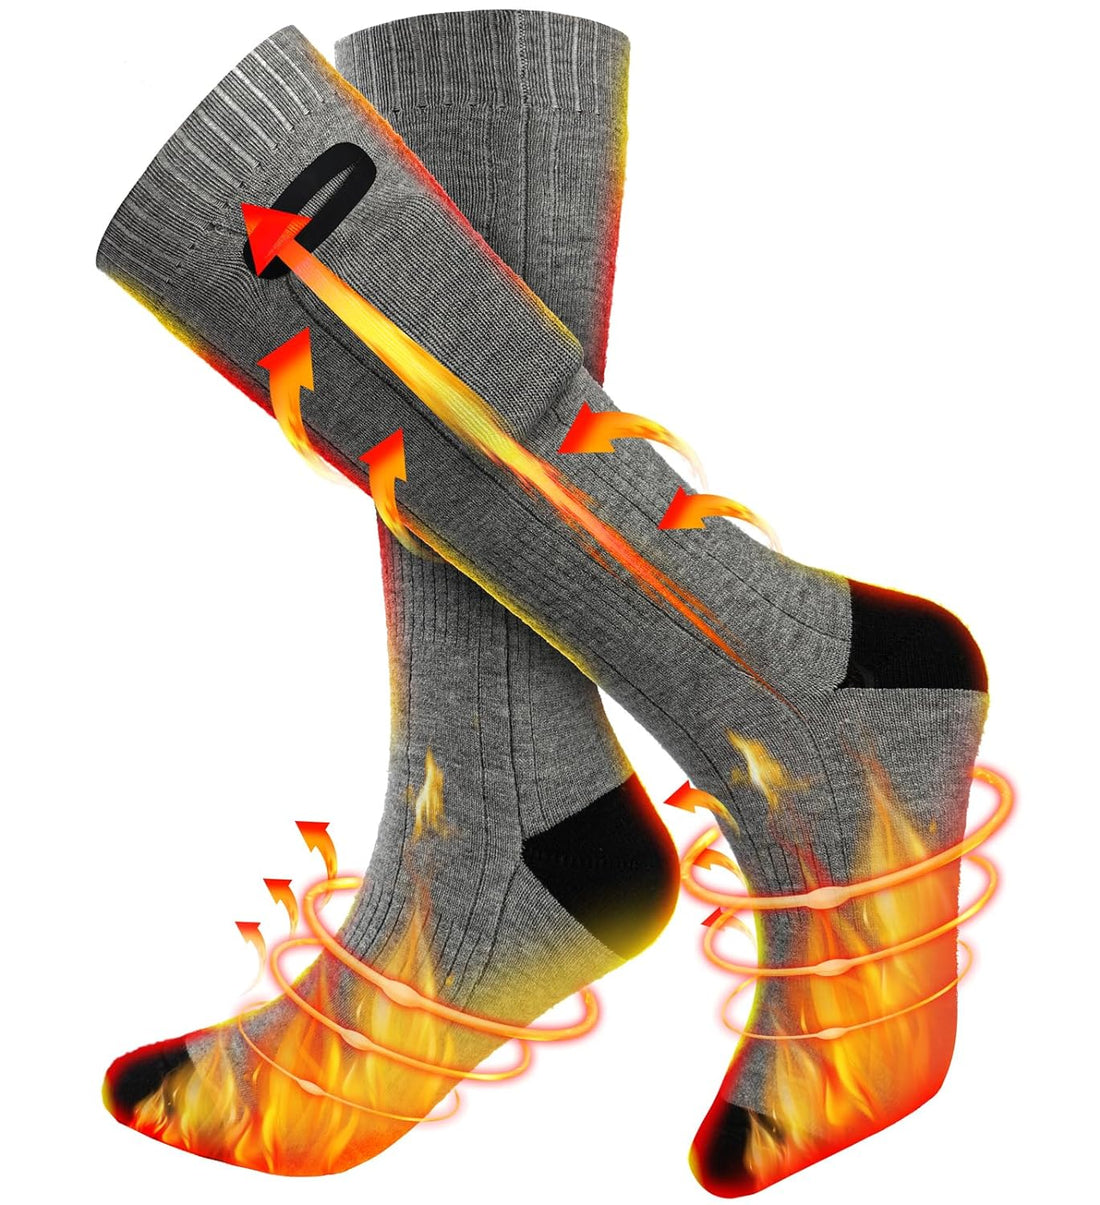 Heated Socks for Men Women, 4500 mAh Electric Rechargeable Heated Socks, Warm Winter Battery Heated Socks Women Outdoor Riding Camping Hiking Motorcycle Heated Ski Sock